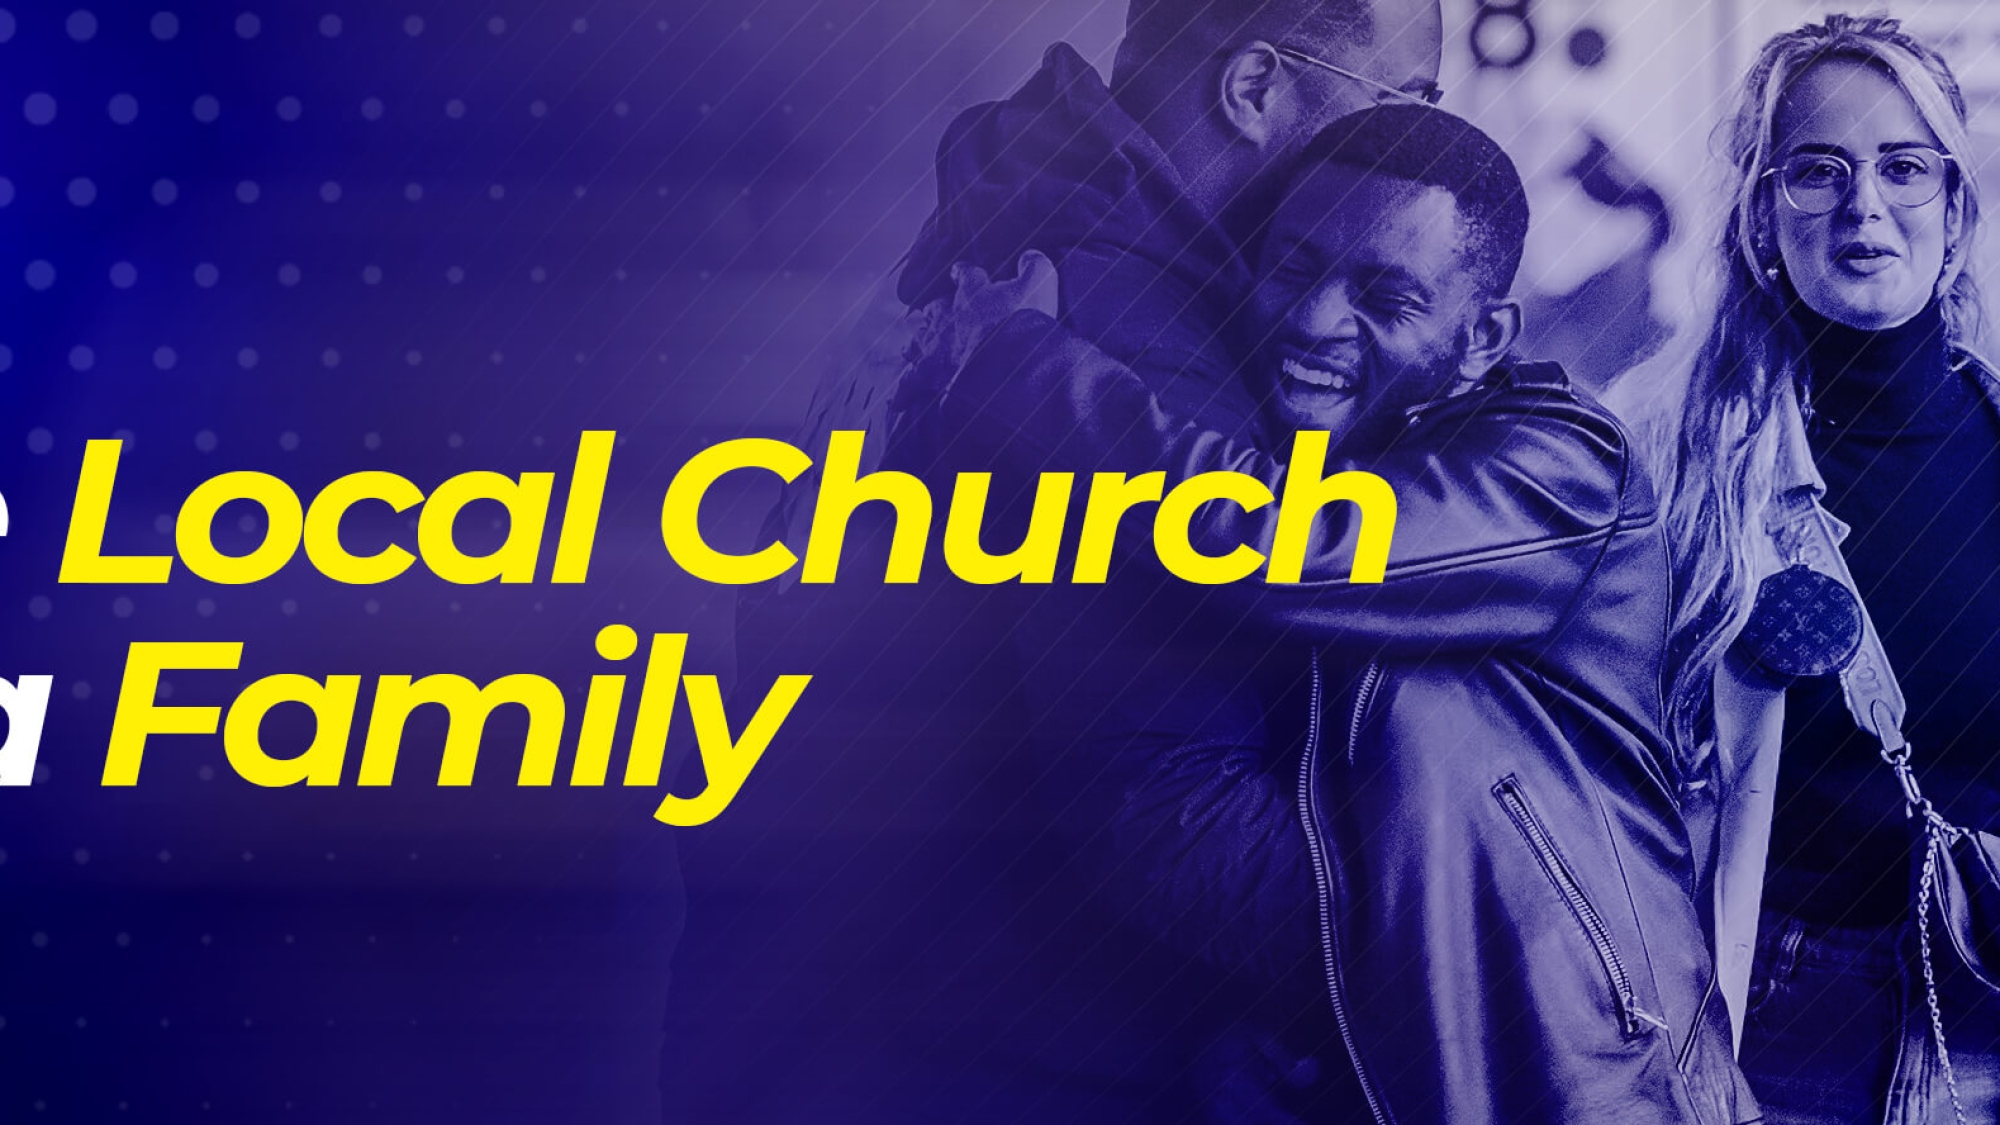 The Local Church As A Family